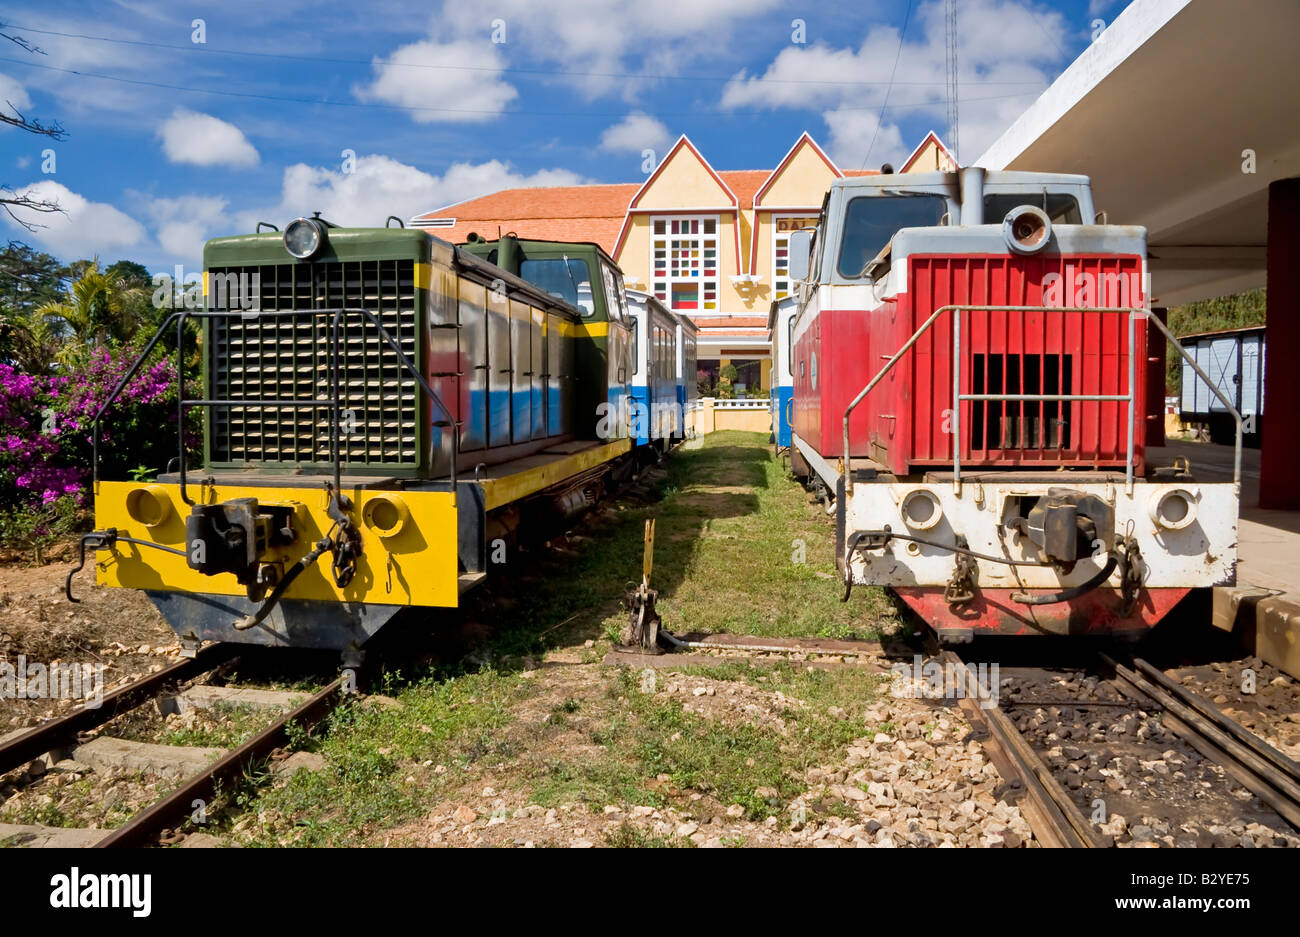 Preserved railway station with diesel locomotives, Dalat, Central Highlands, Vietnam Stock Photo